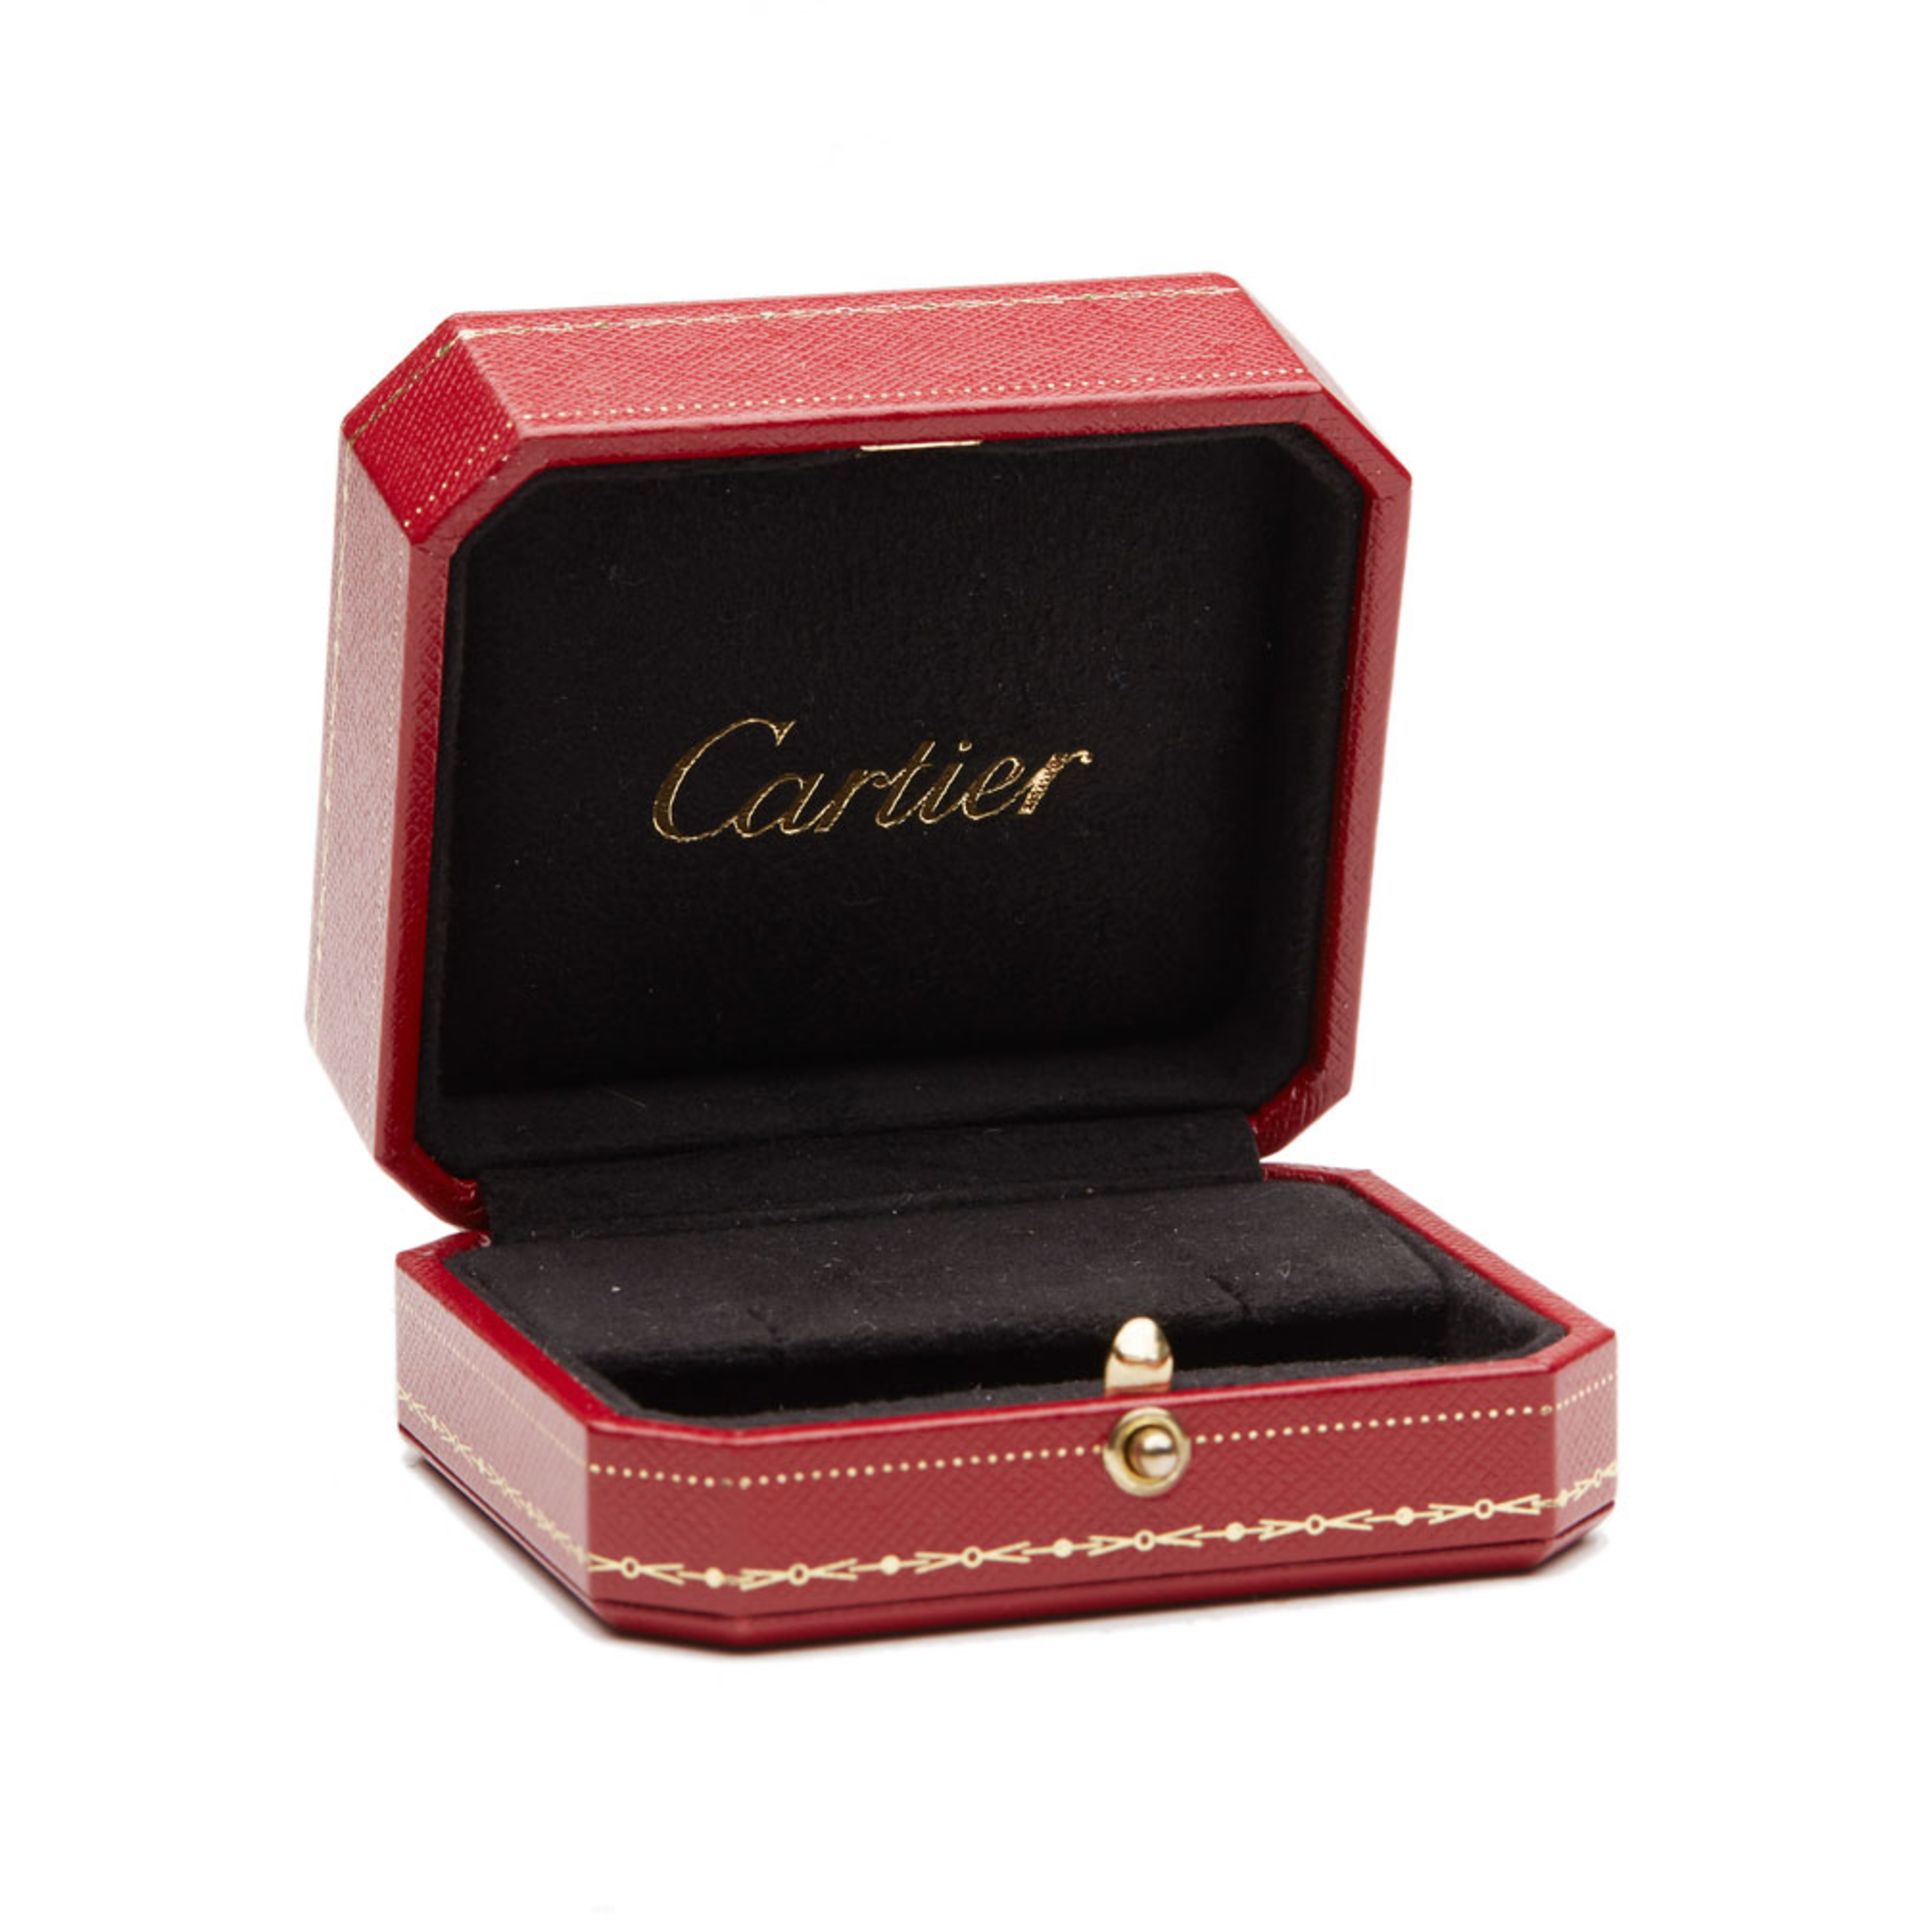 Cartier 18k Yellow Gold Double Hoop Diamond Earrings - Image 11 of 11